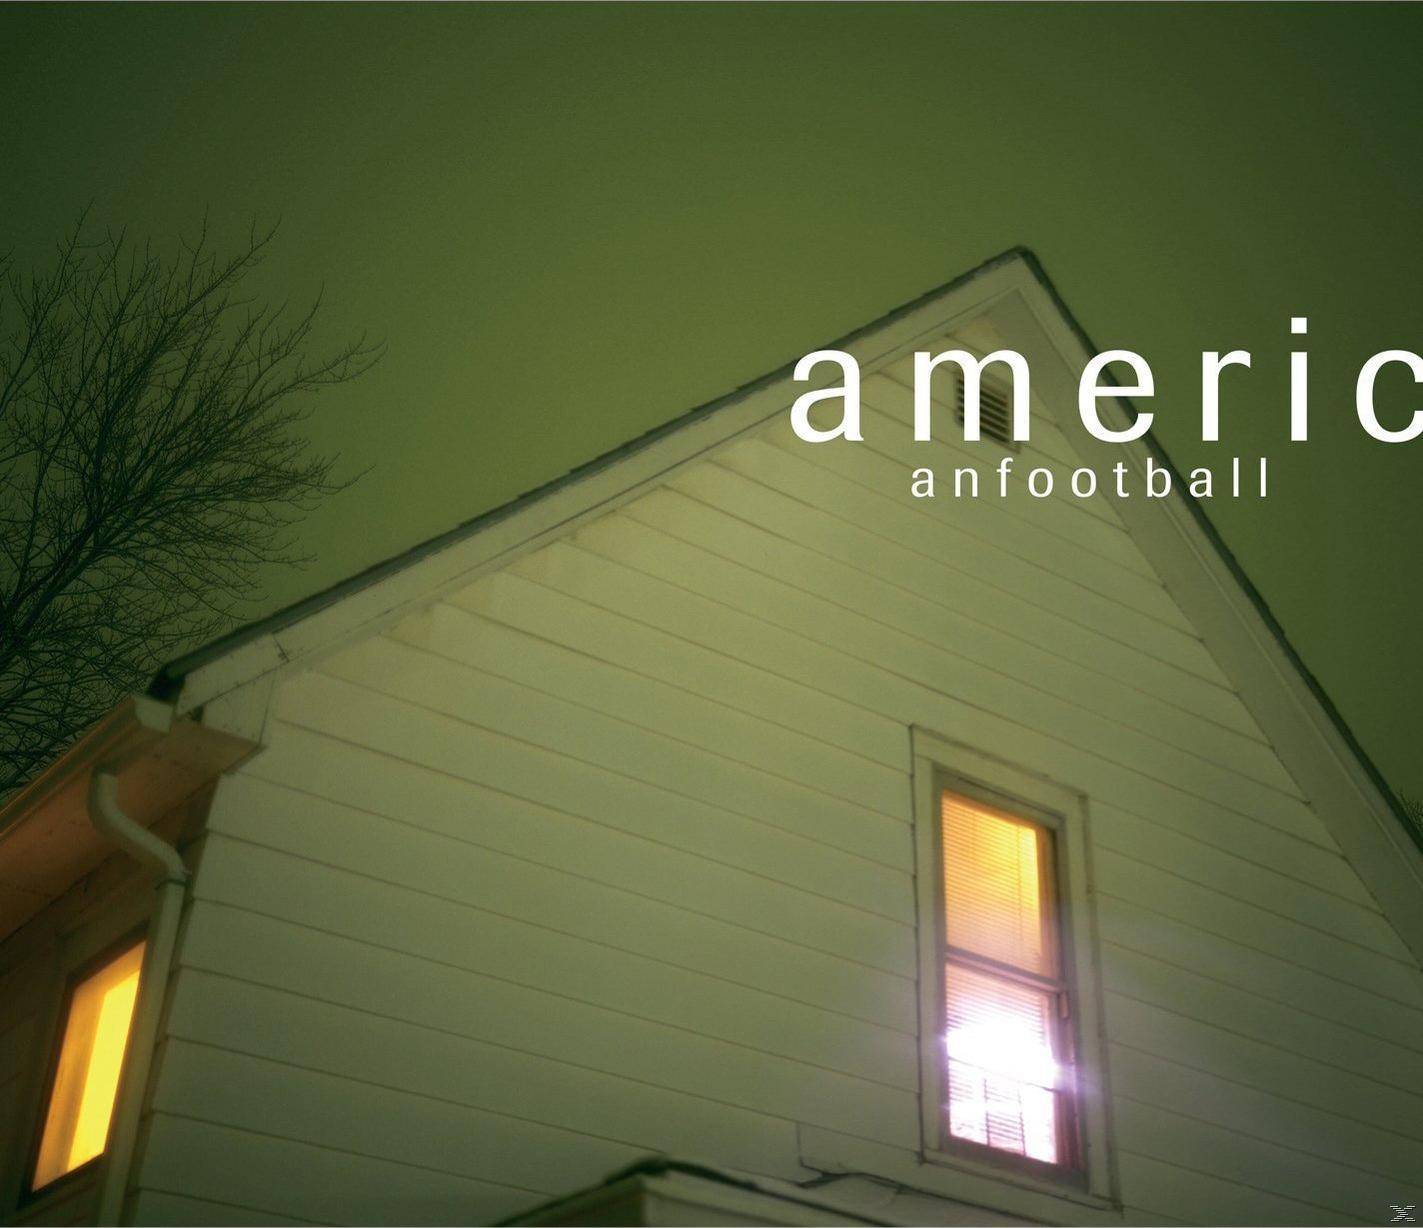 (Vinyl) Edition) American - (Deluxe American Football Football -